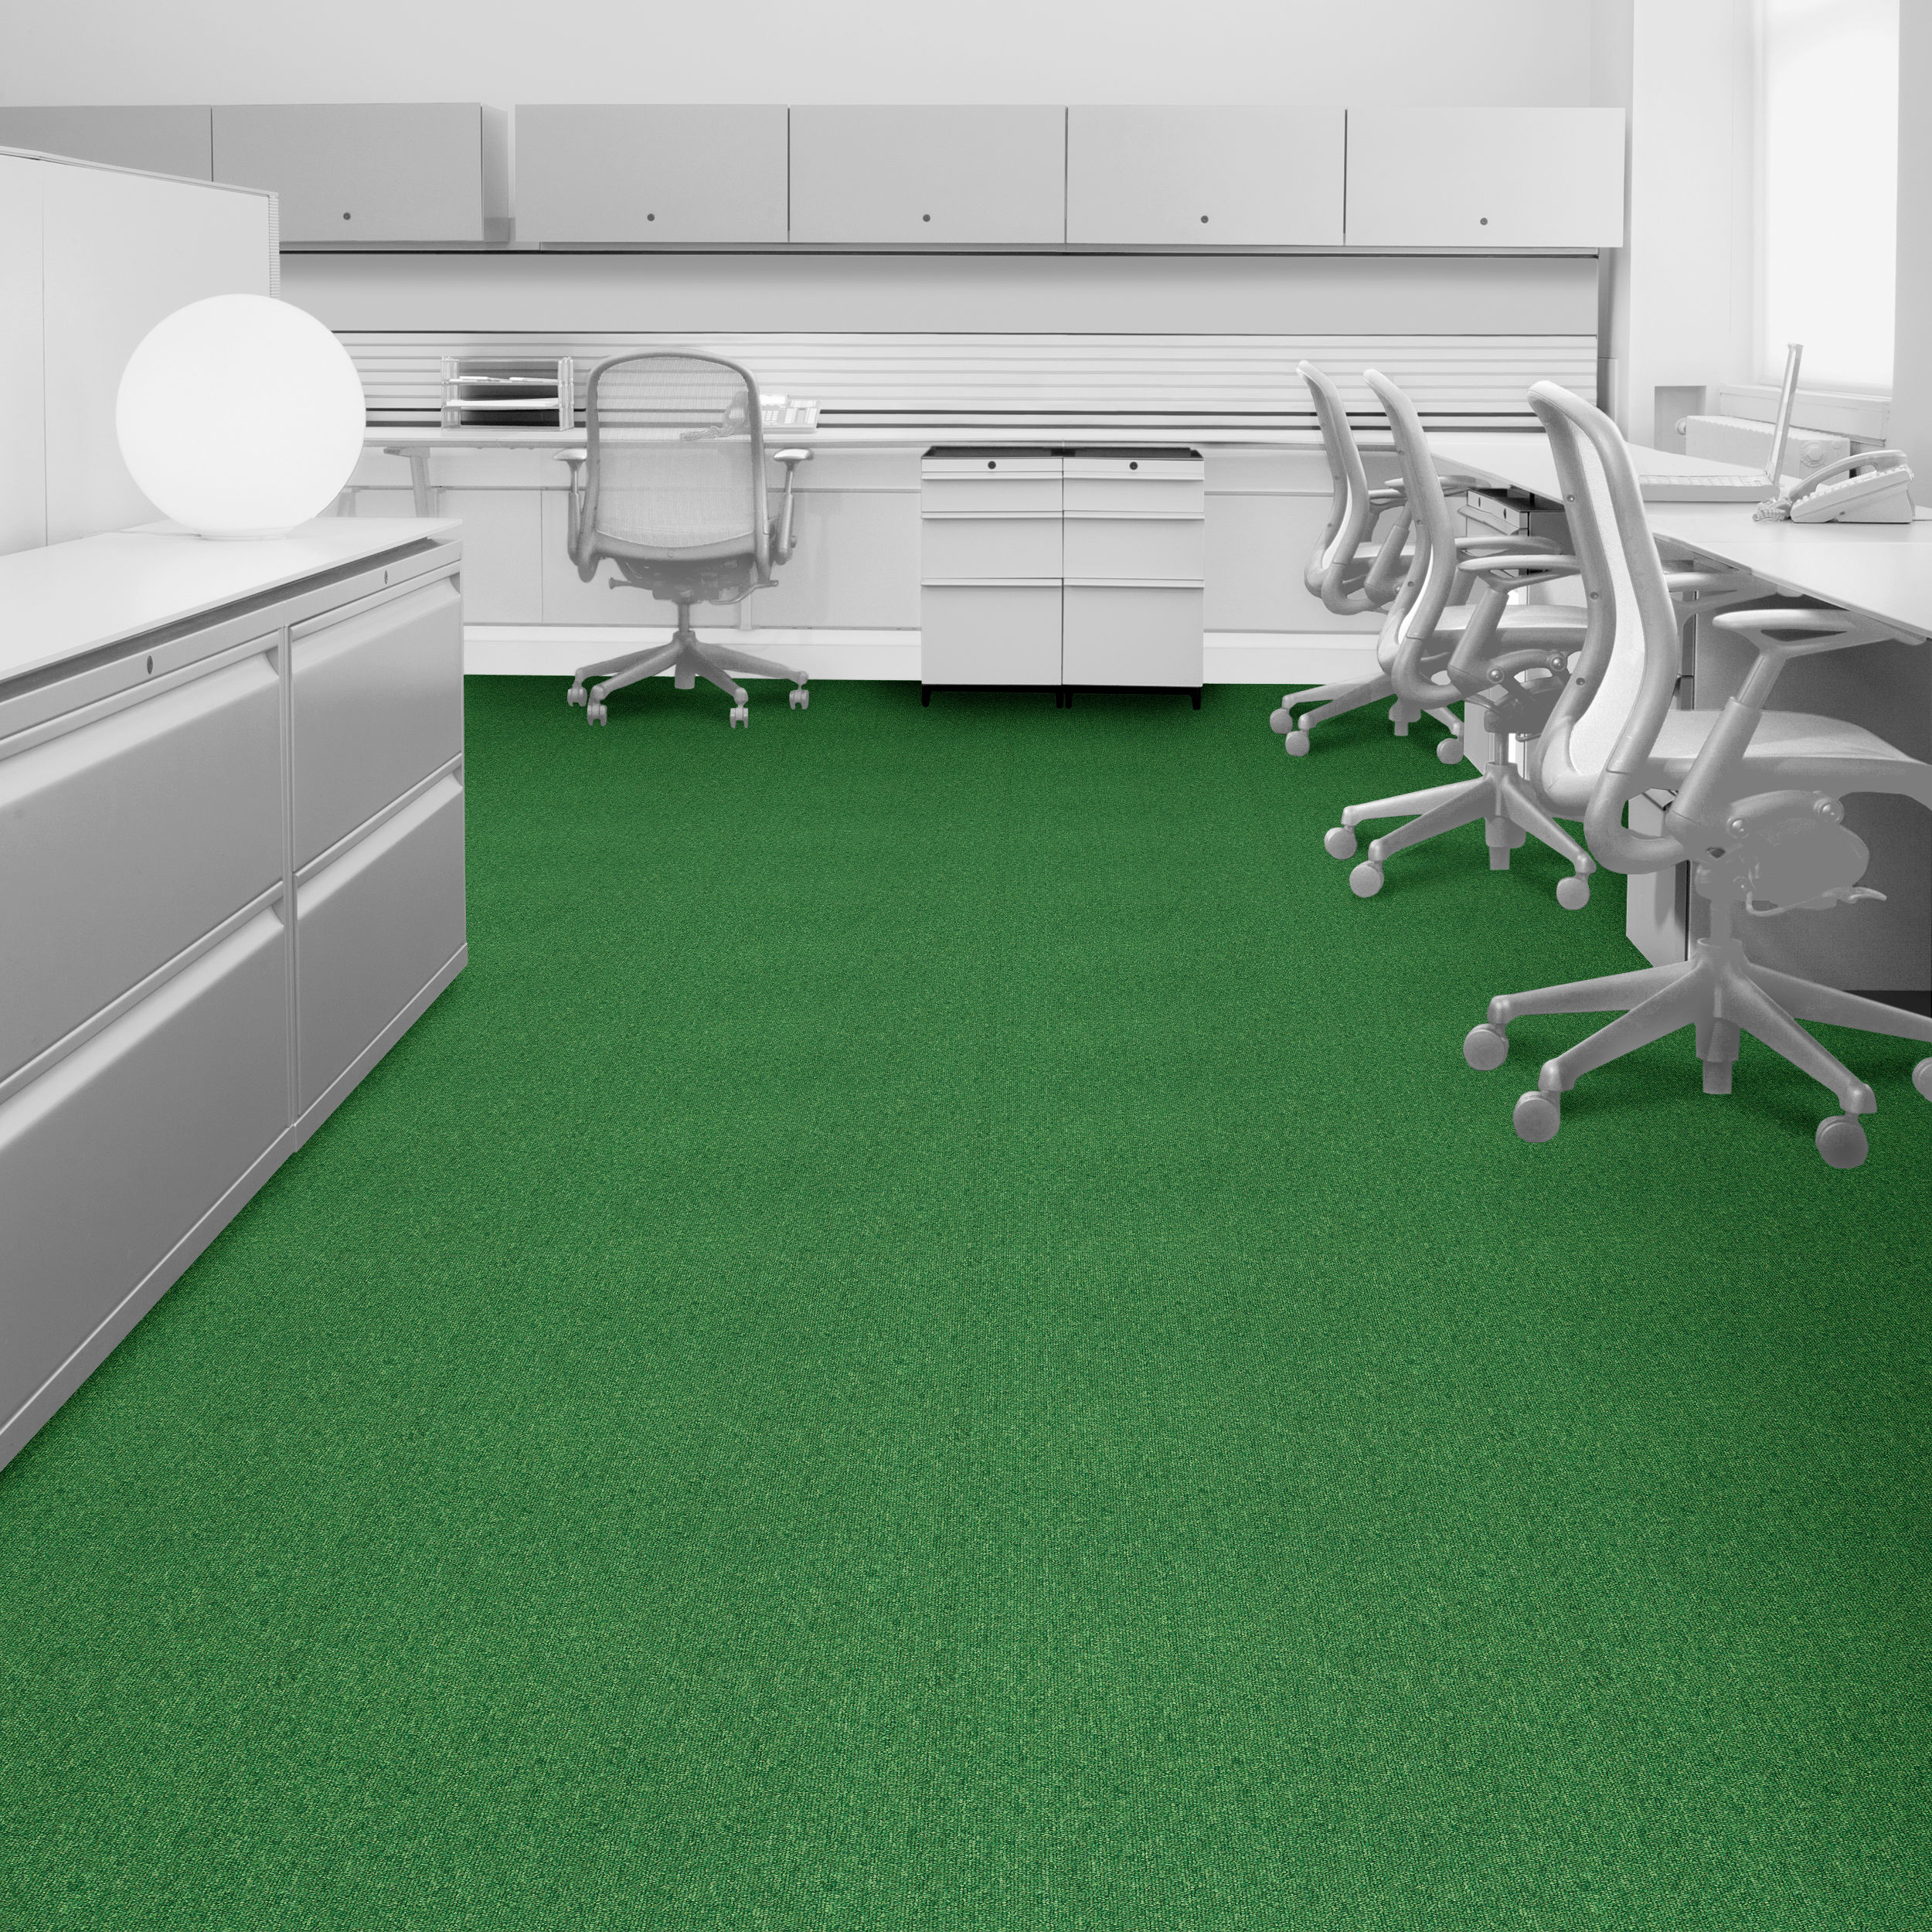 Interface Heuga 580 Carpet Tile - Palm variation in office setting.